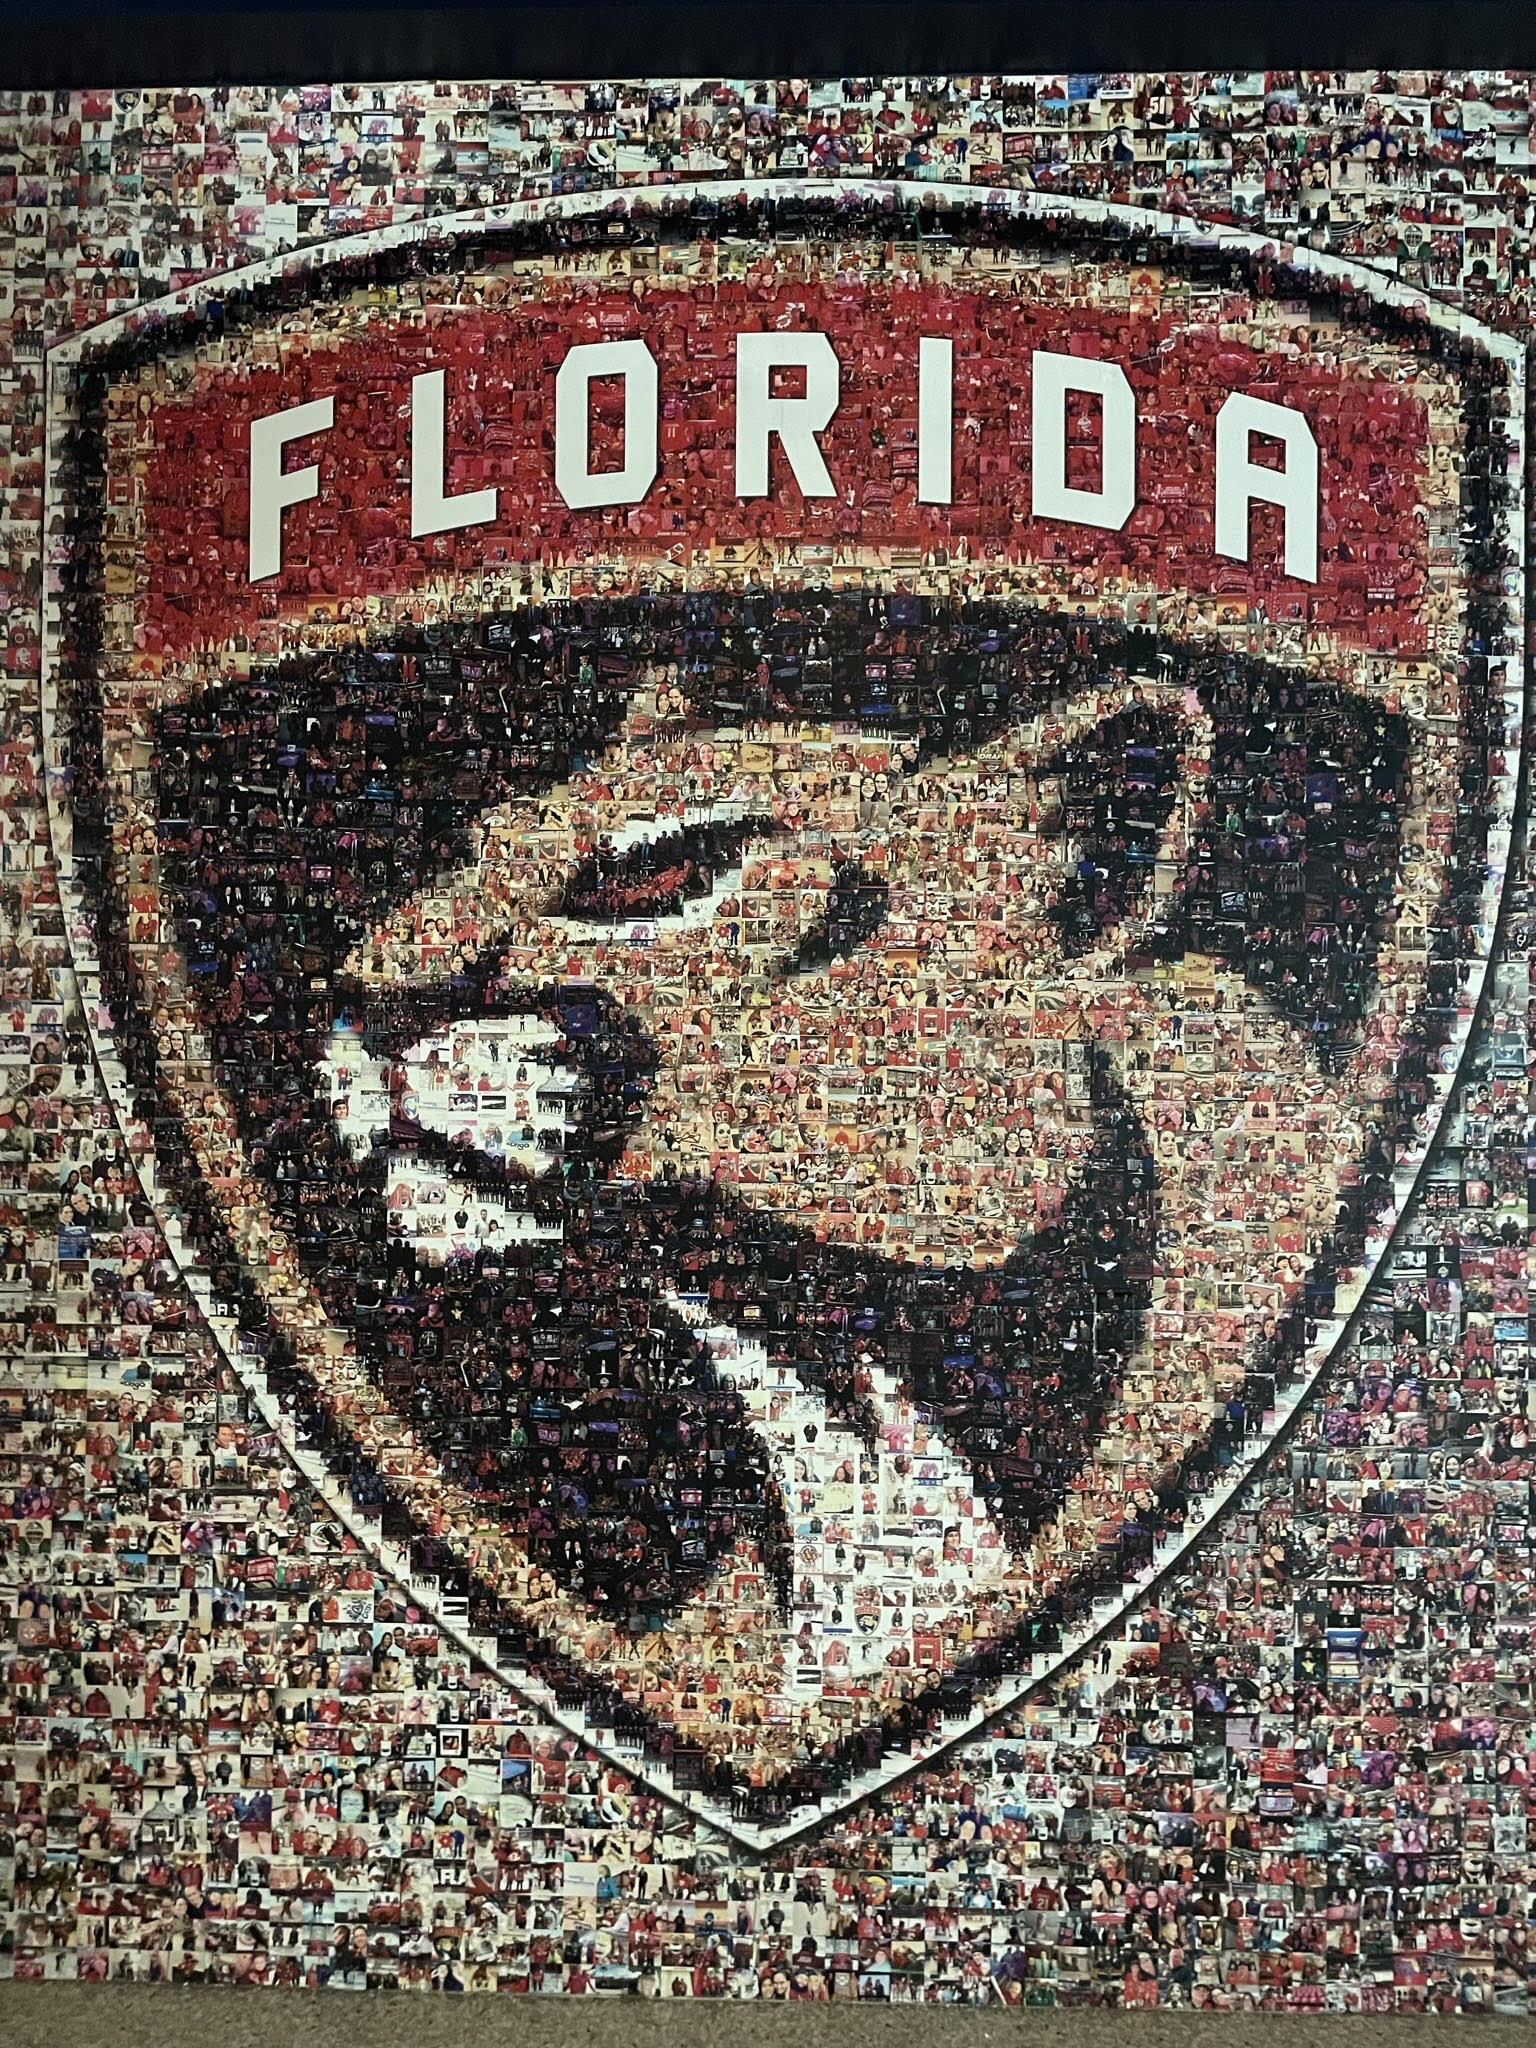 Florida Jr. Panthers (@FJPhockey) / X